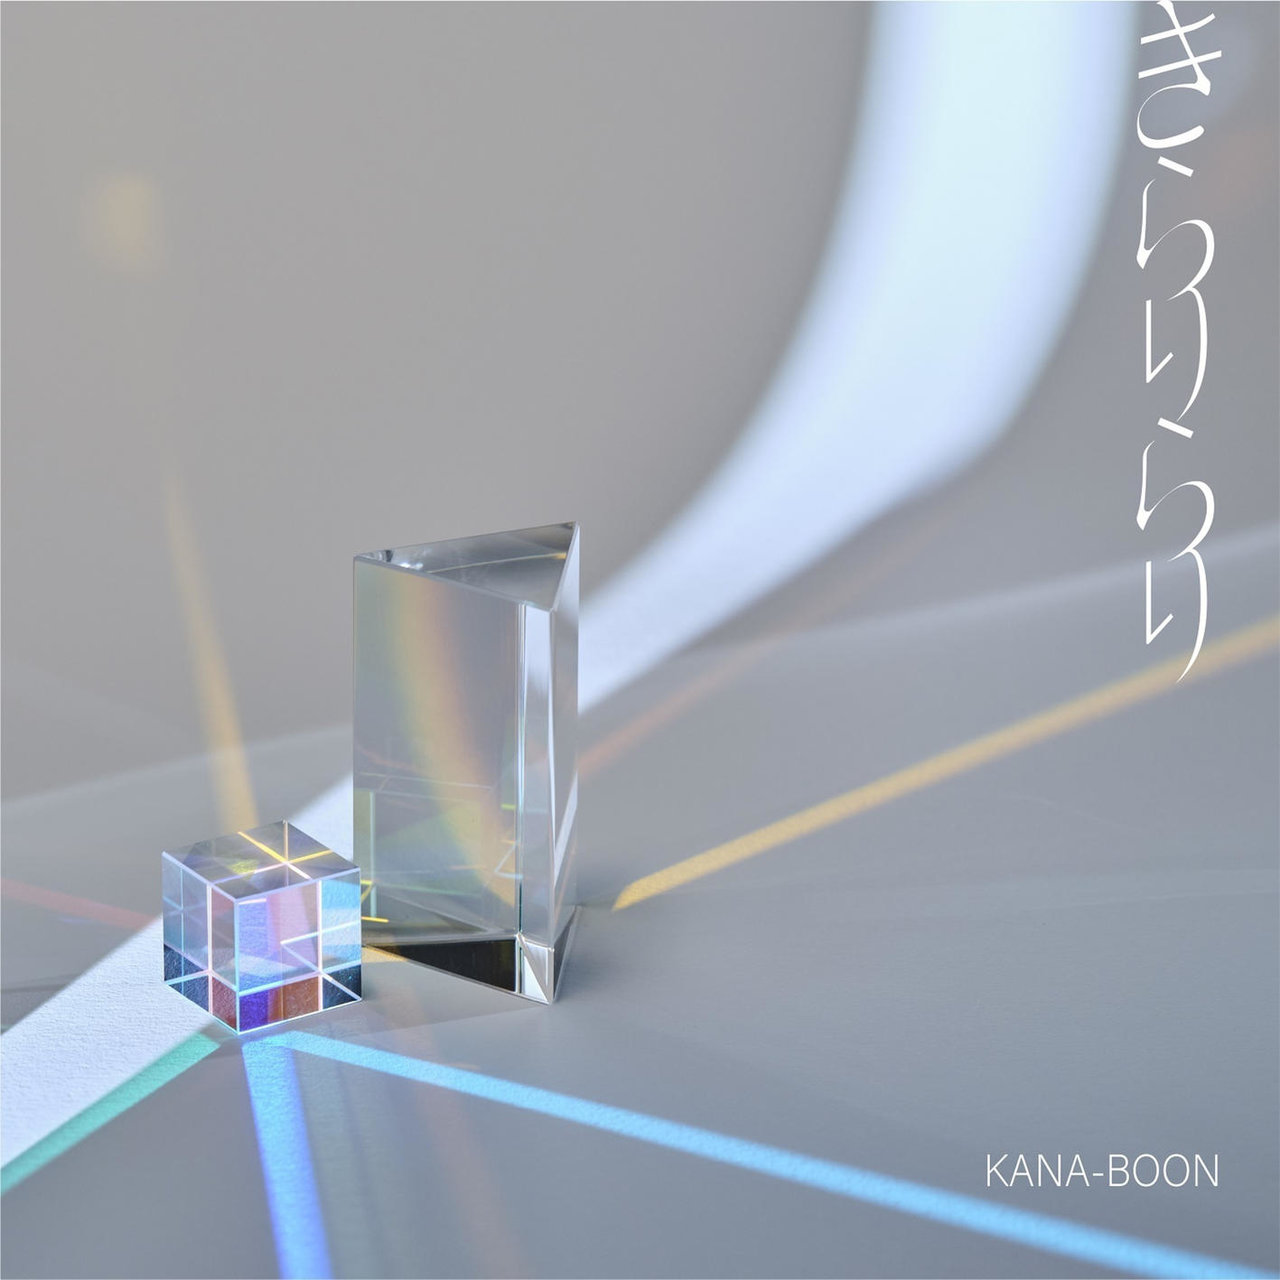 KANA-BOON Kirarirari cover artwork